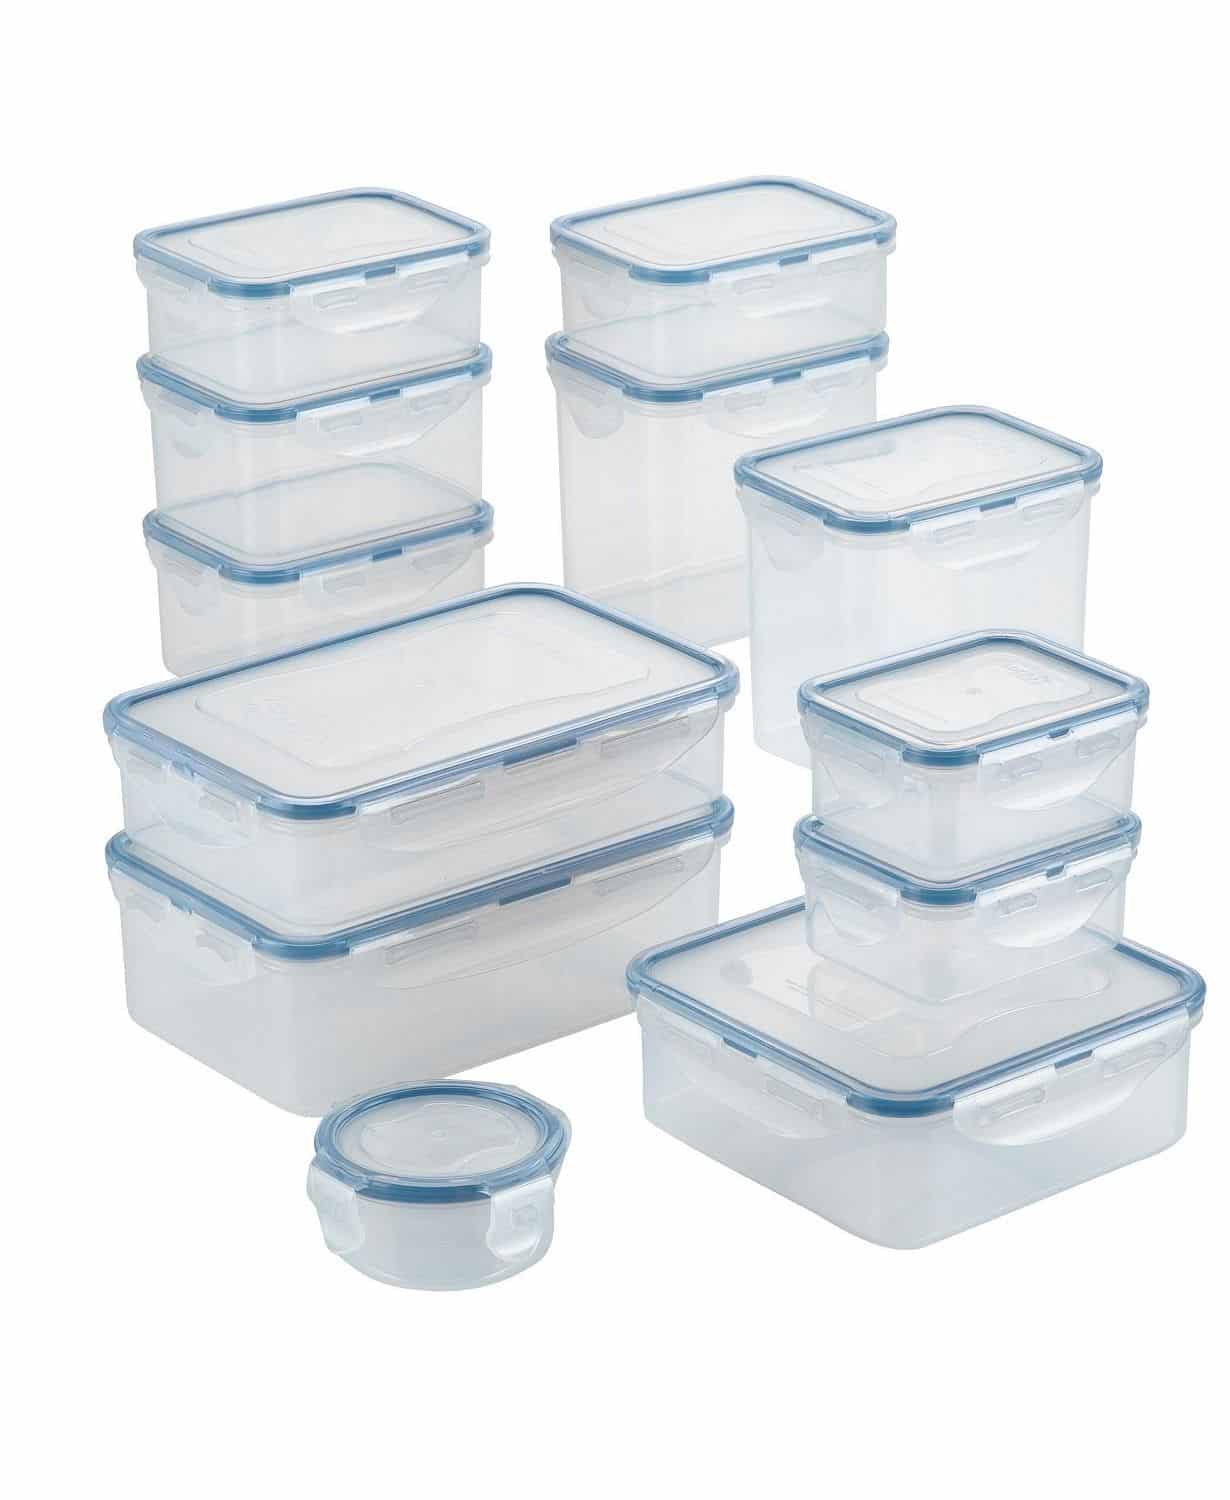 24 Pcs Lock n Lock Easy Essentials Basics Food Storage Container Set -$19.99(60% Off)